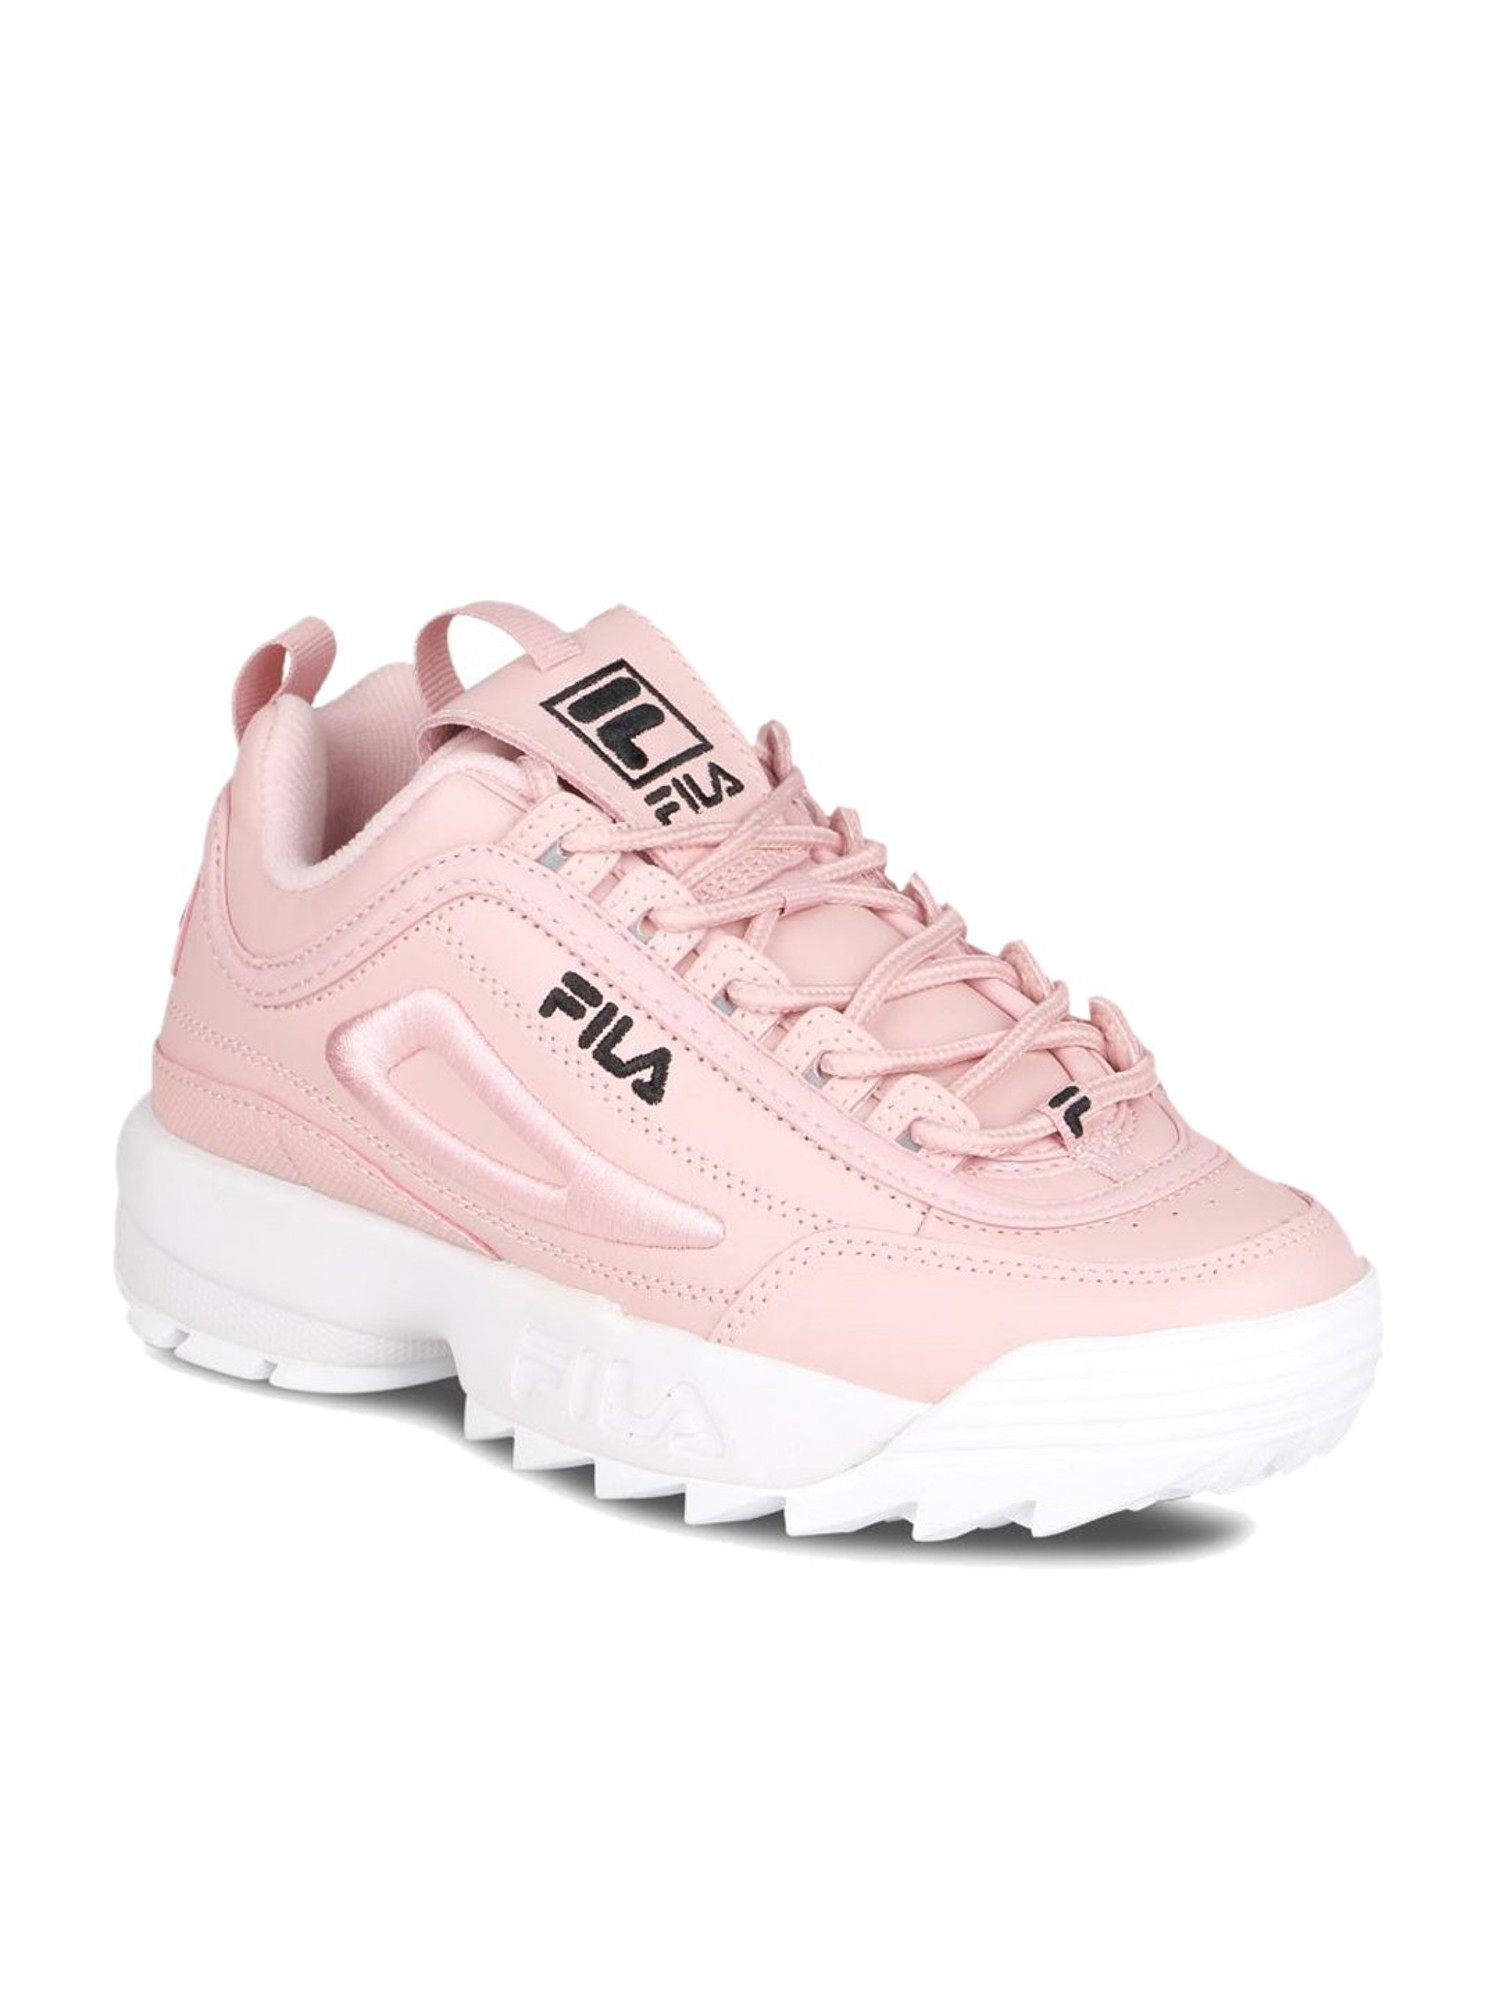 Fila Disruptor II 3D Pink Sneakers from 